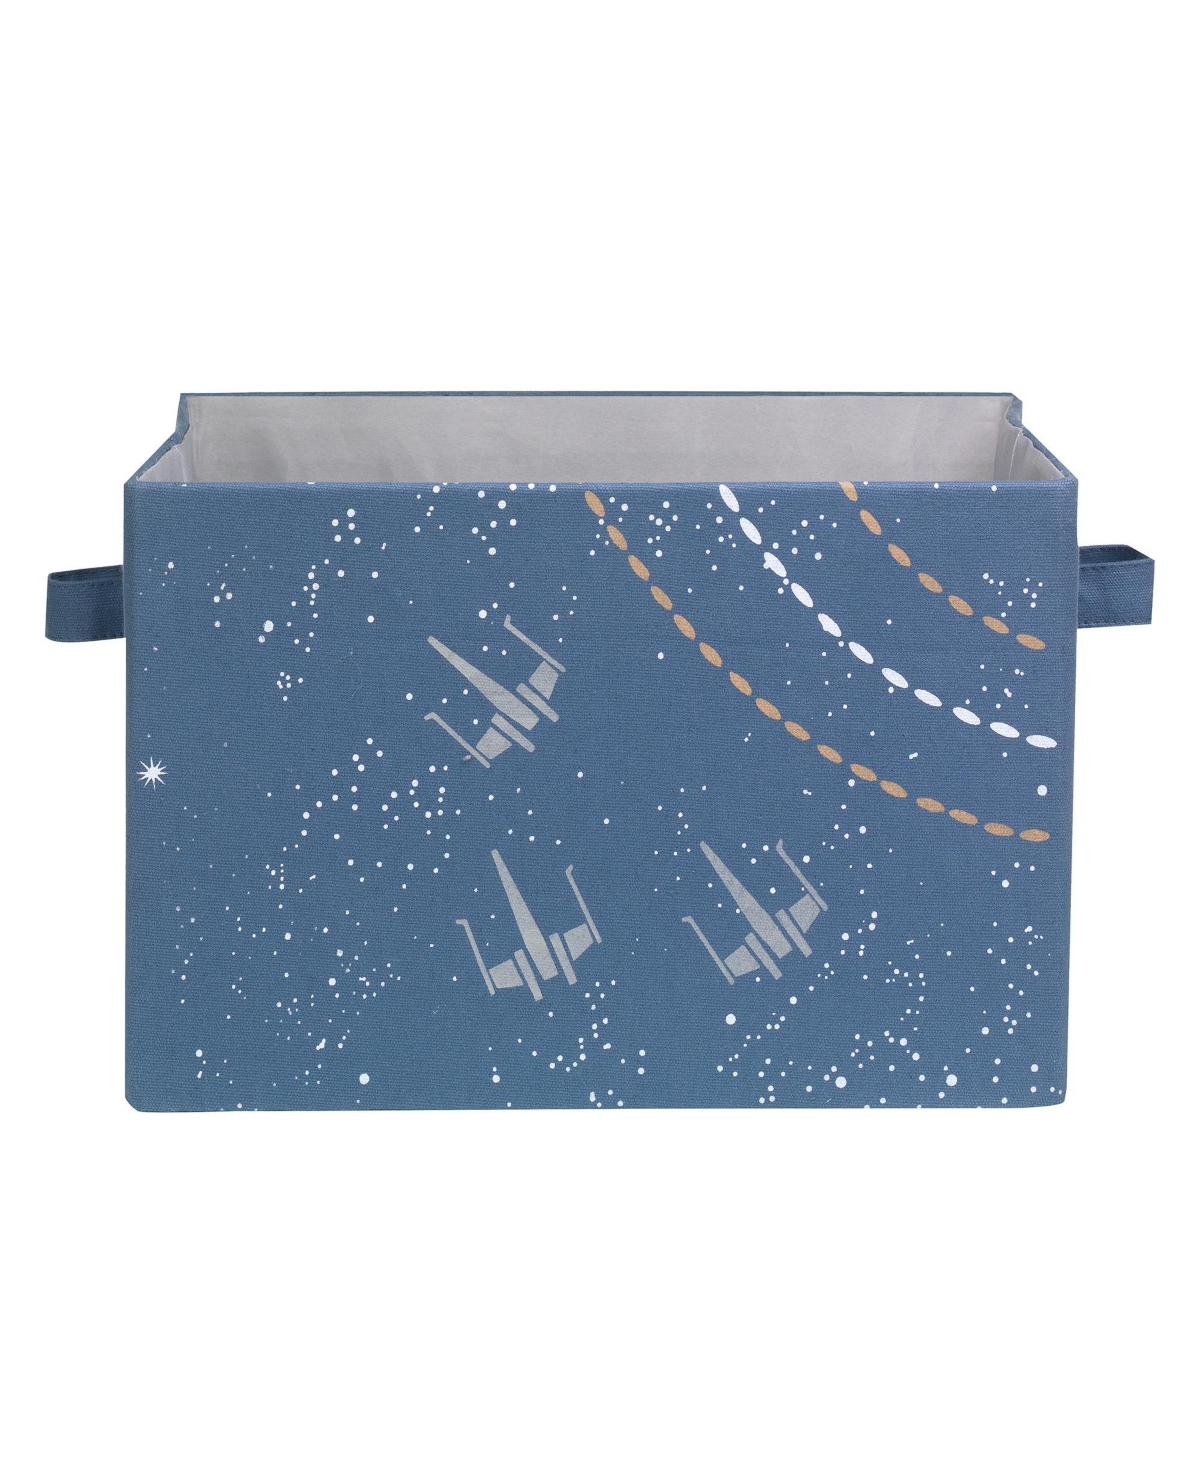 Star Wars Galaxy Foldable/Collapsible Storage Bin/Basket Organizer - Blue